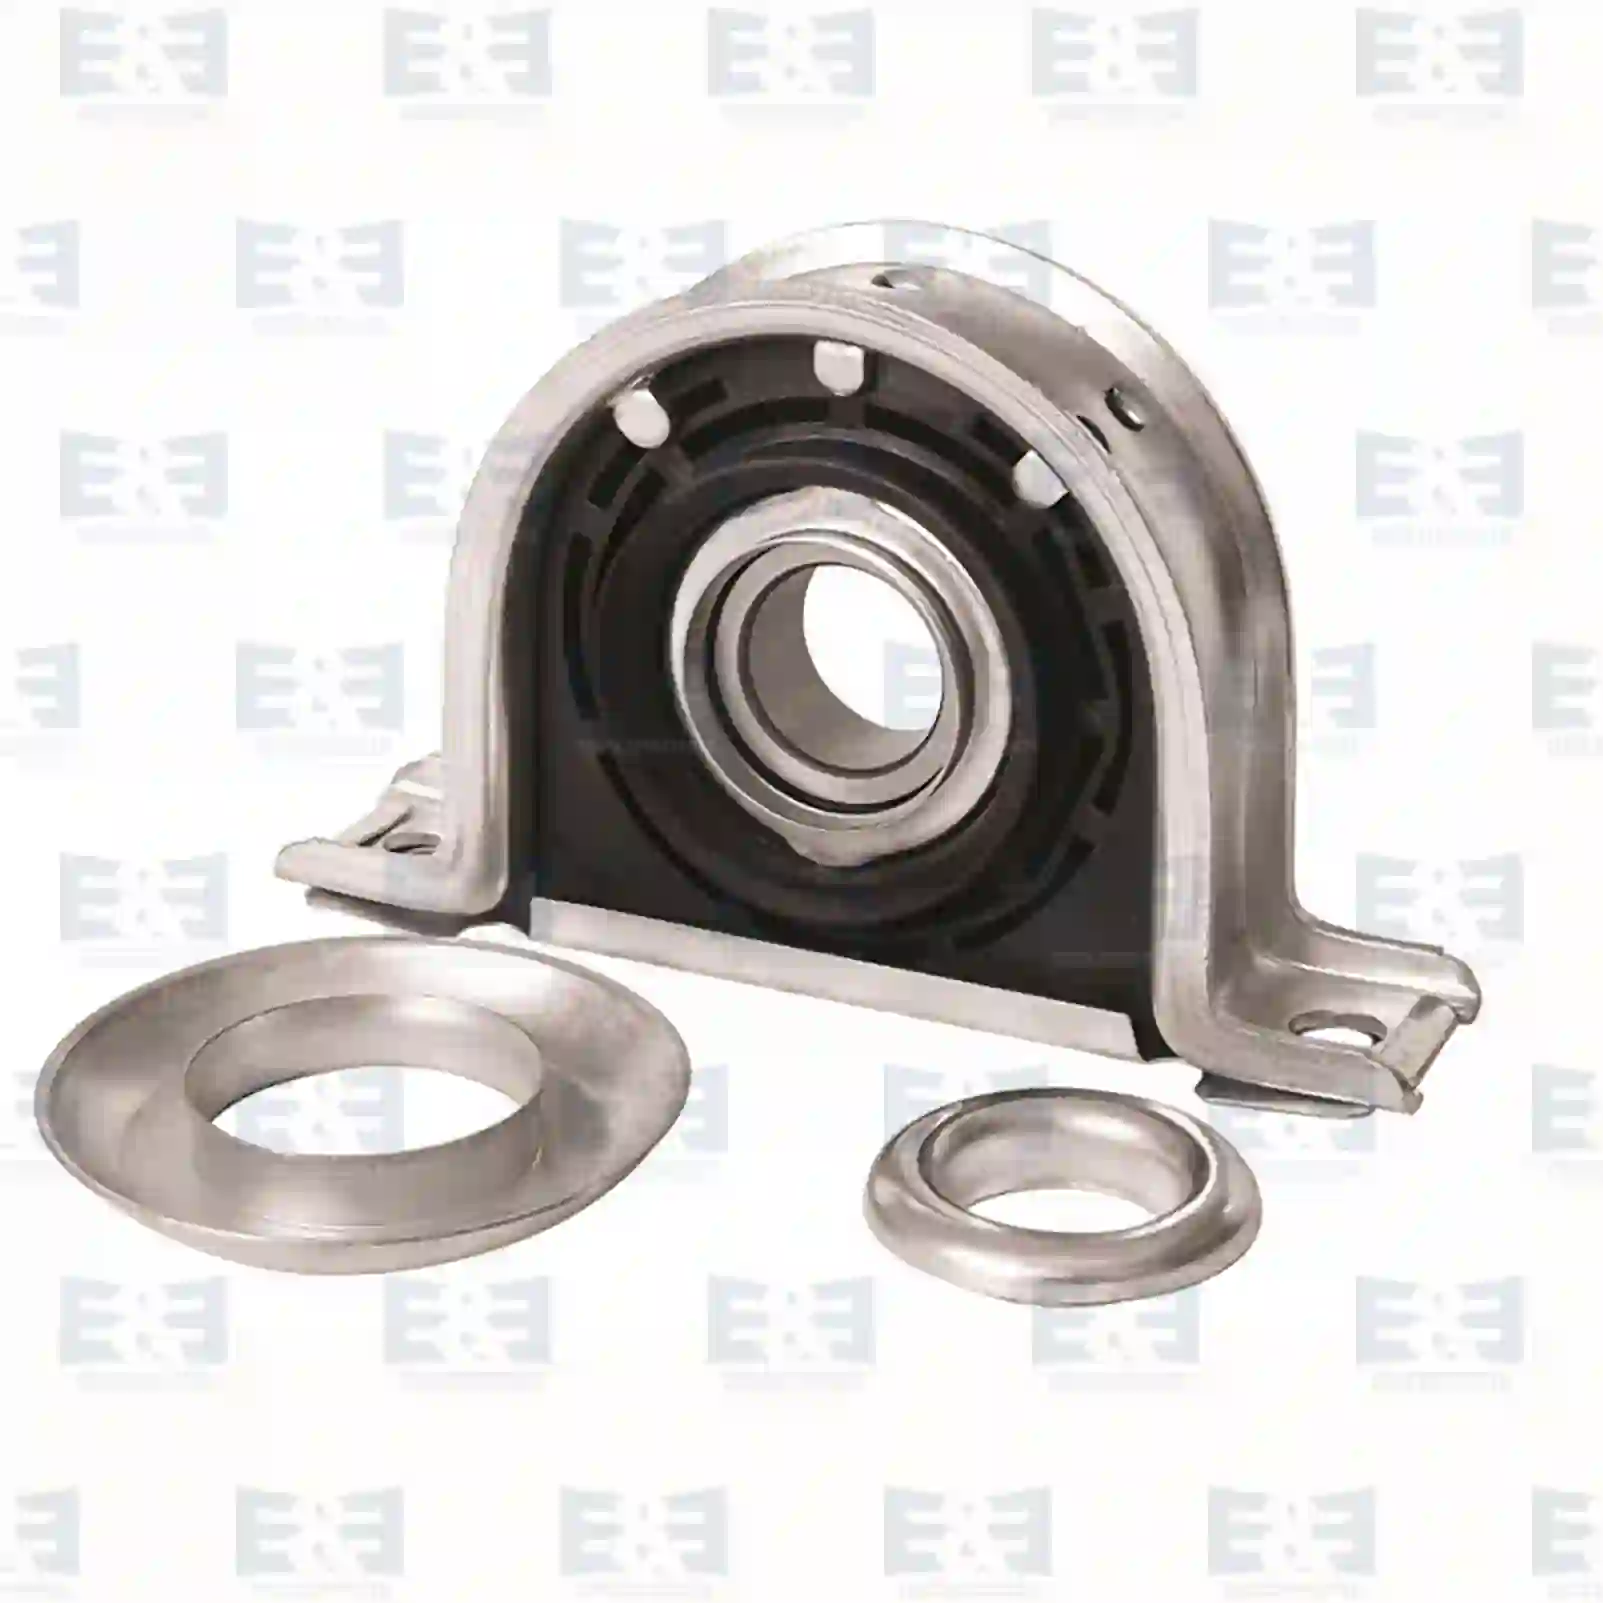  Center bearing || E&E Truck Spare Parts | Truck Spare Parts, Auotomotive Spare Parts